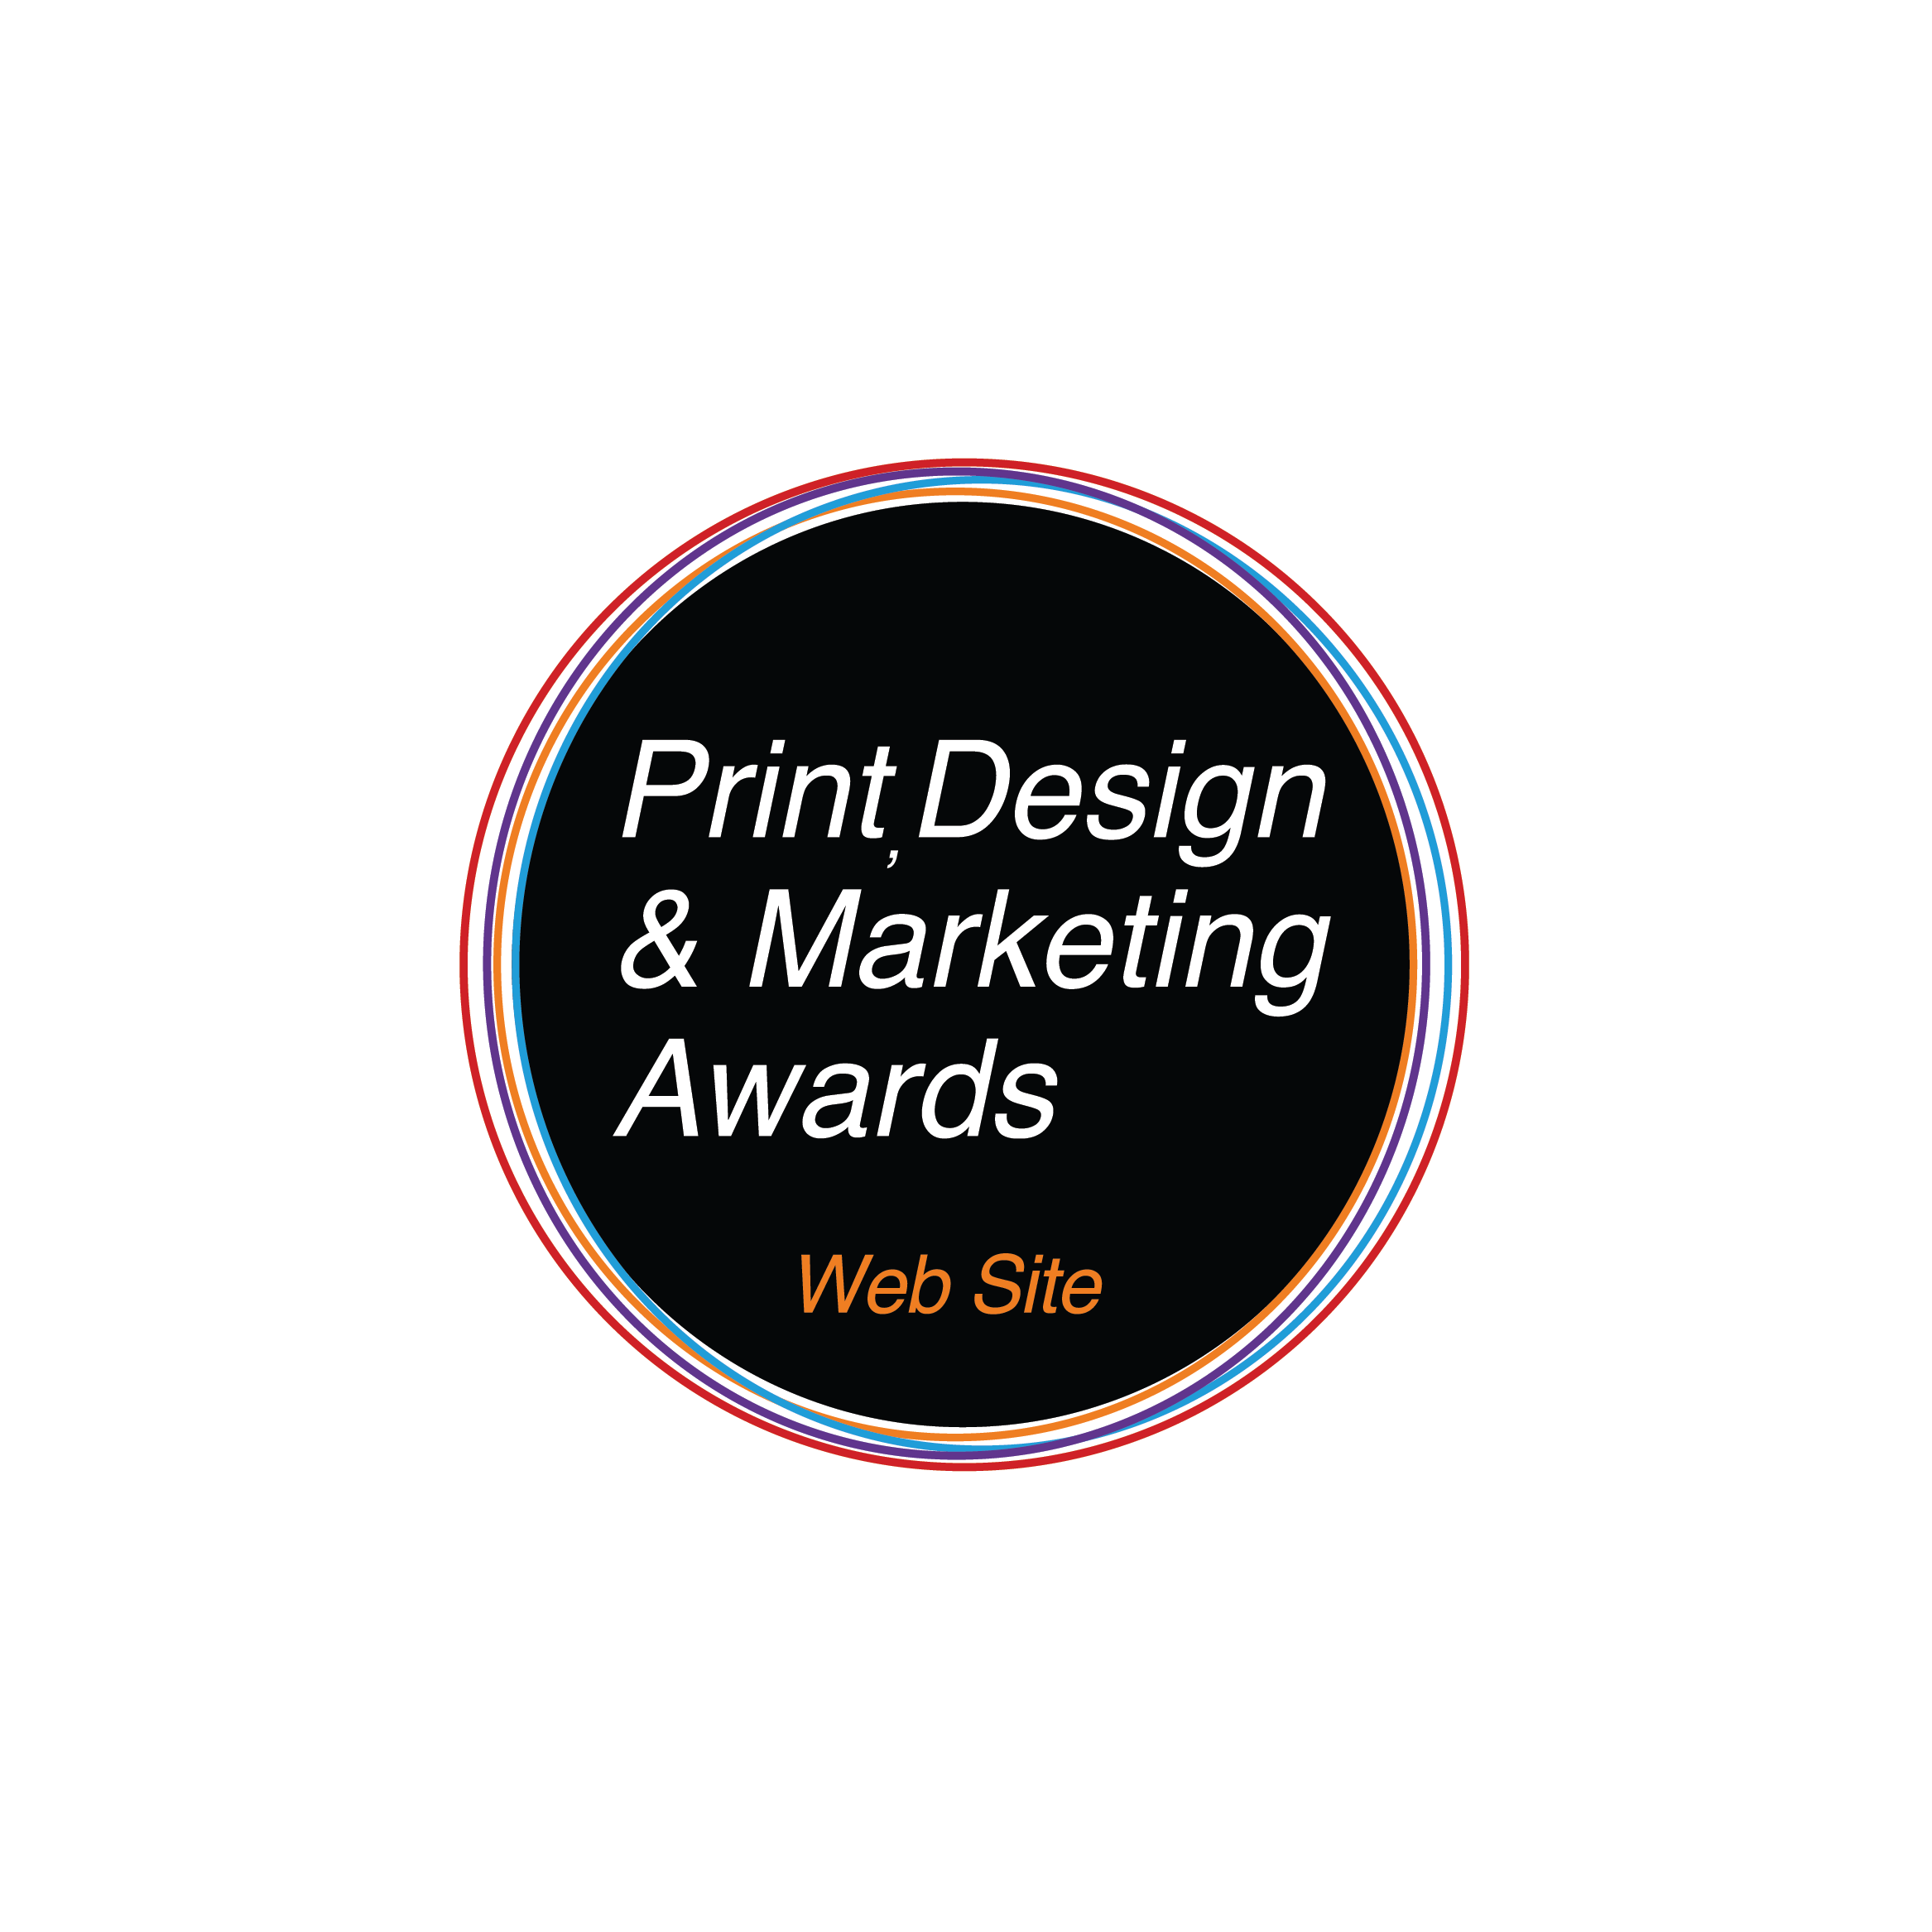 Print, Design & Marketing Awards for Website logo